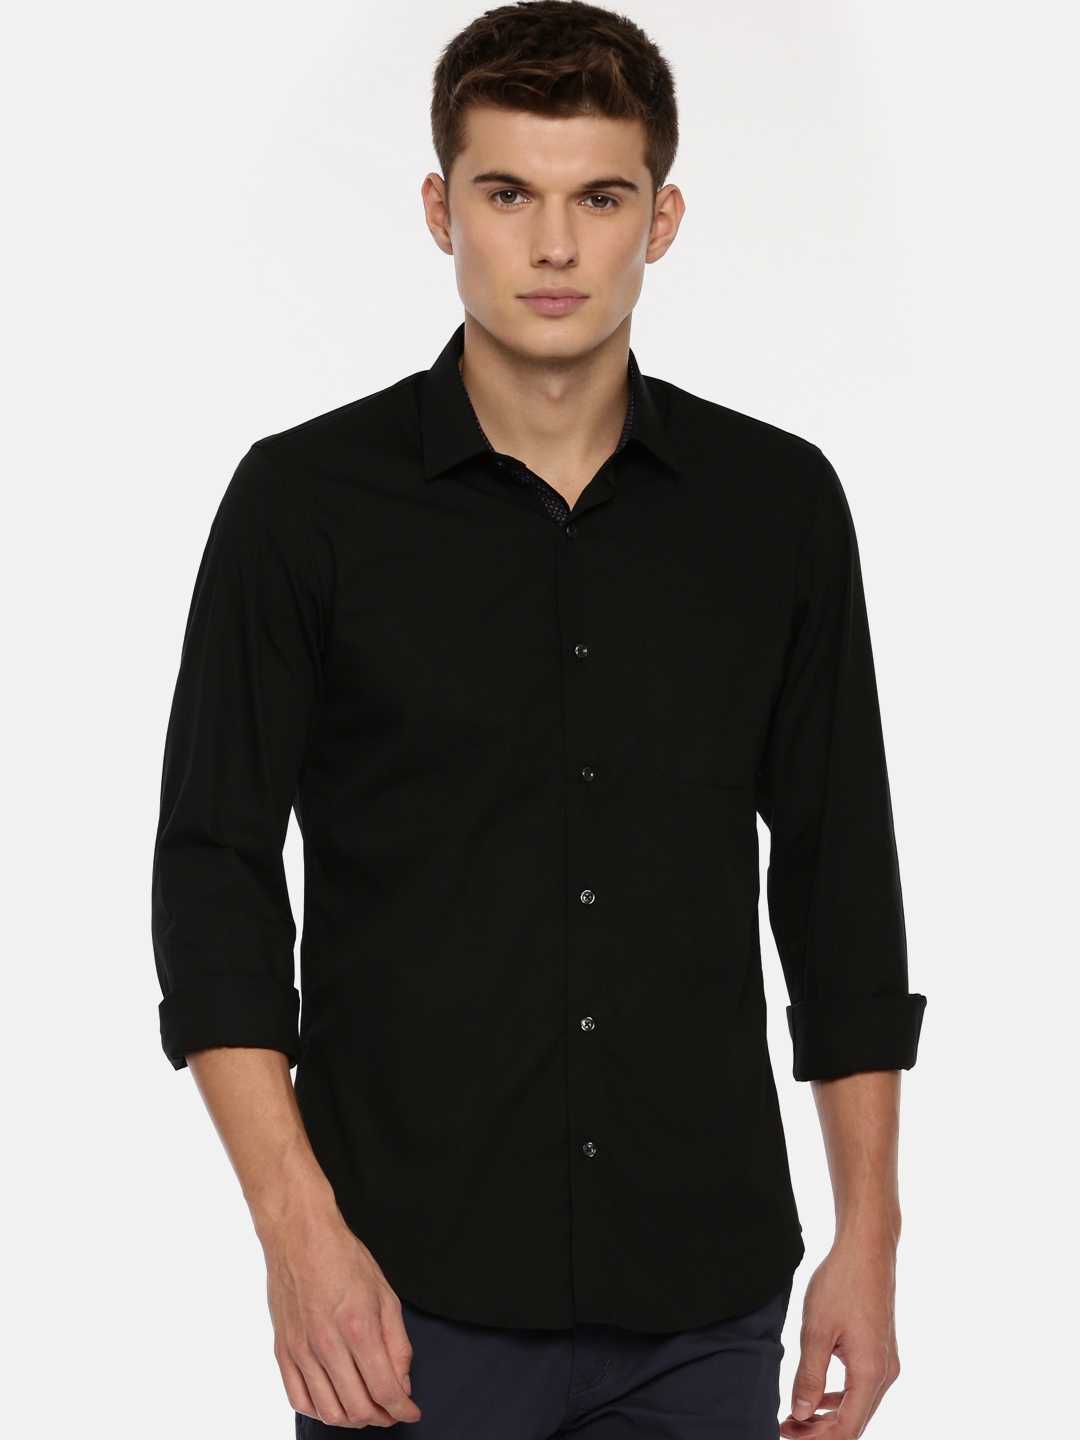 Buy Peter England Casuals Men Black Slim Fit Solid Casual Shirt ...